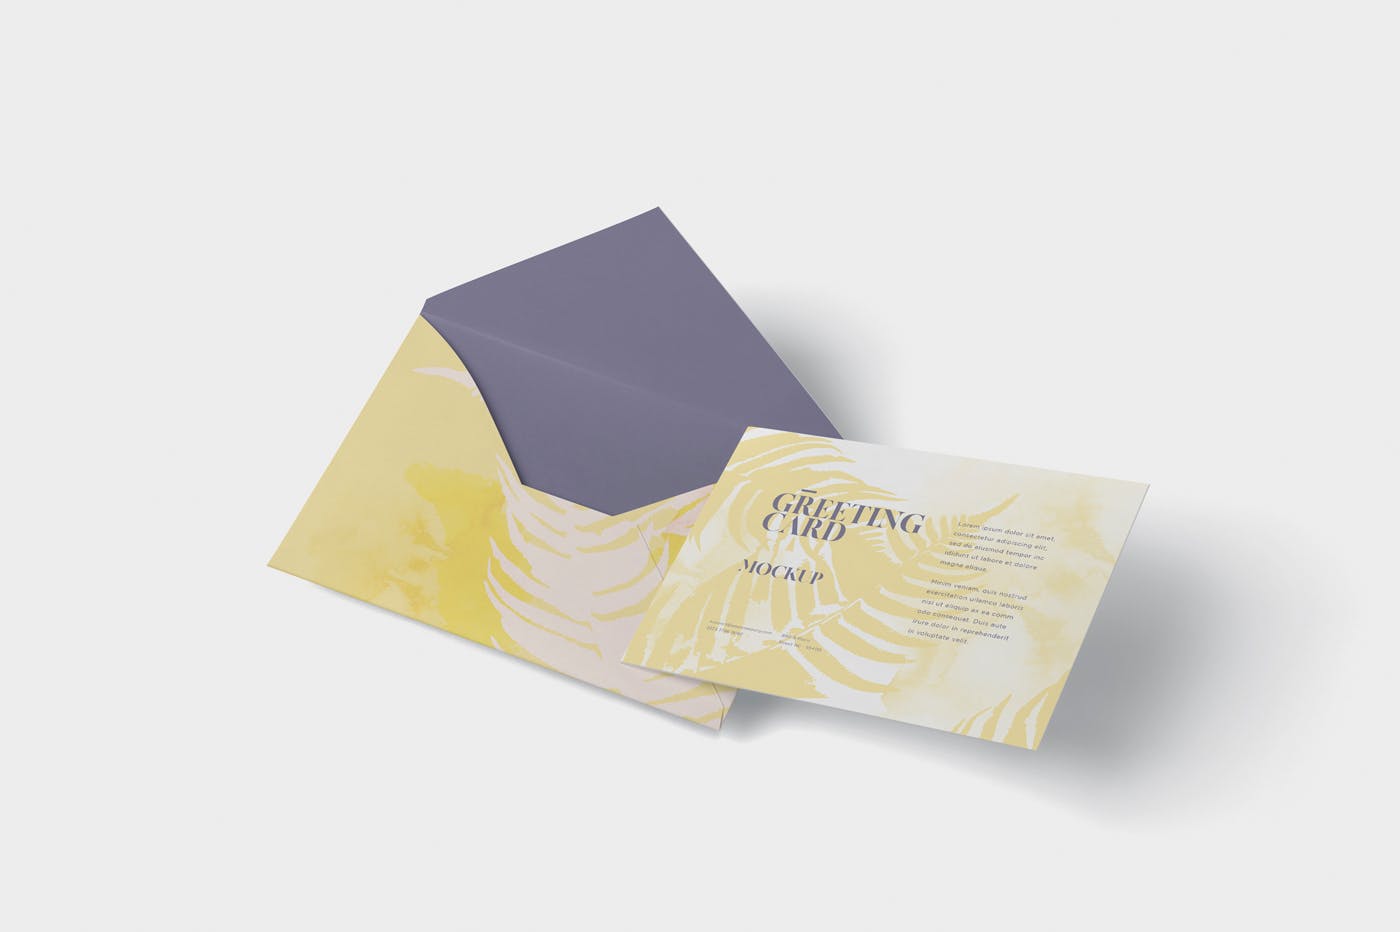 高端企业信封&贺卡设计图第一素材精选 Greeting Card Mockup with Envelope – A6 Size插图(4)